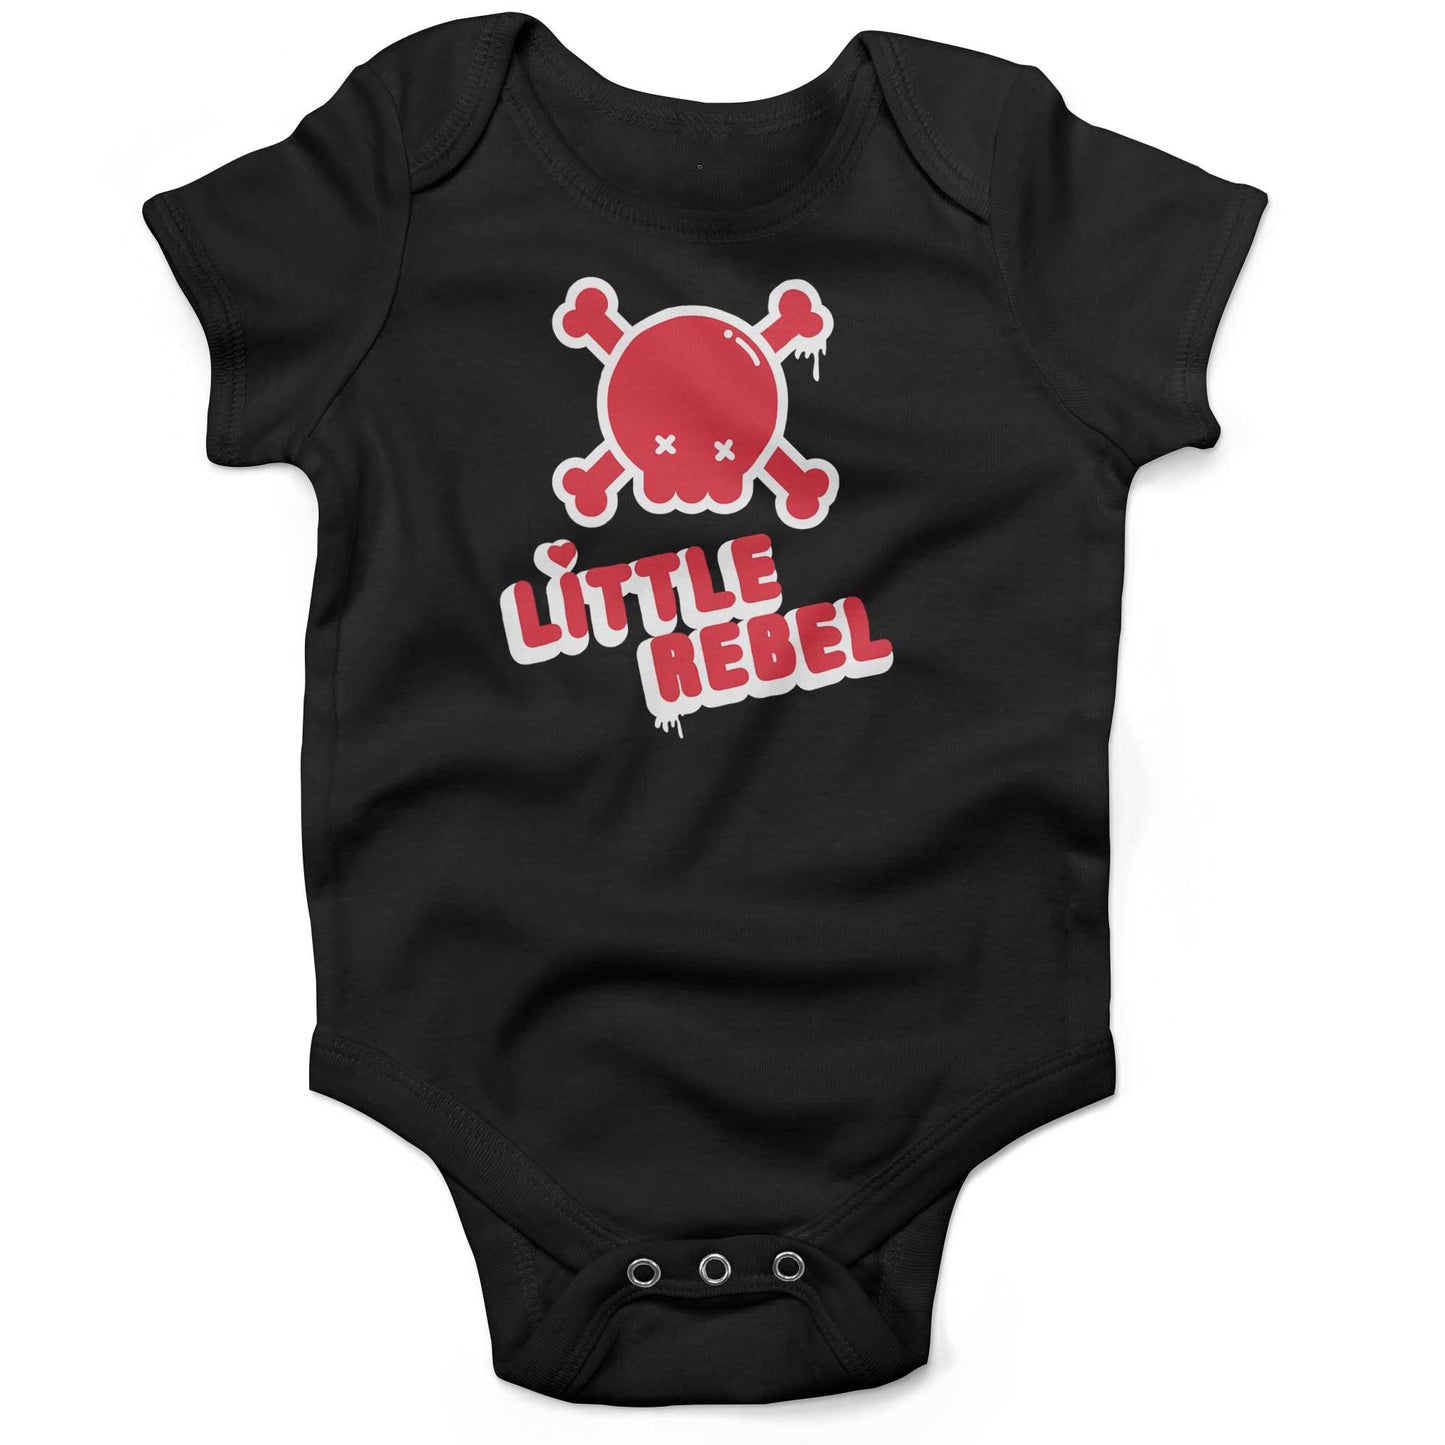 Little Rebel Infant Bodysuit or Raglan Baby Tee-Organic Black-3-6 months